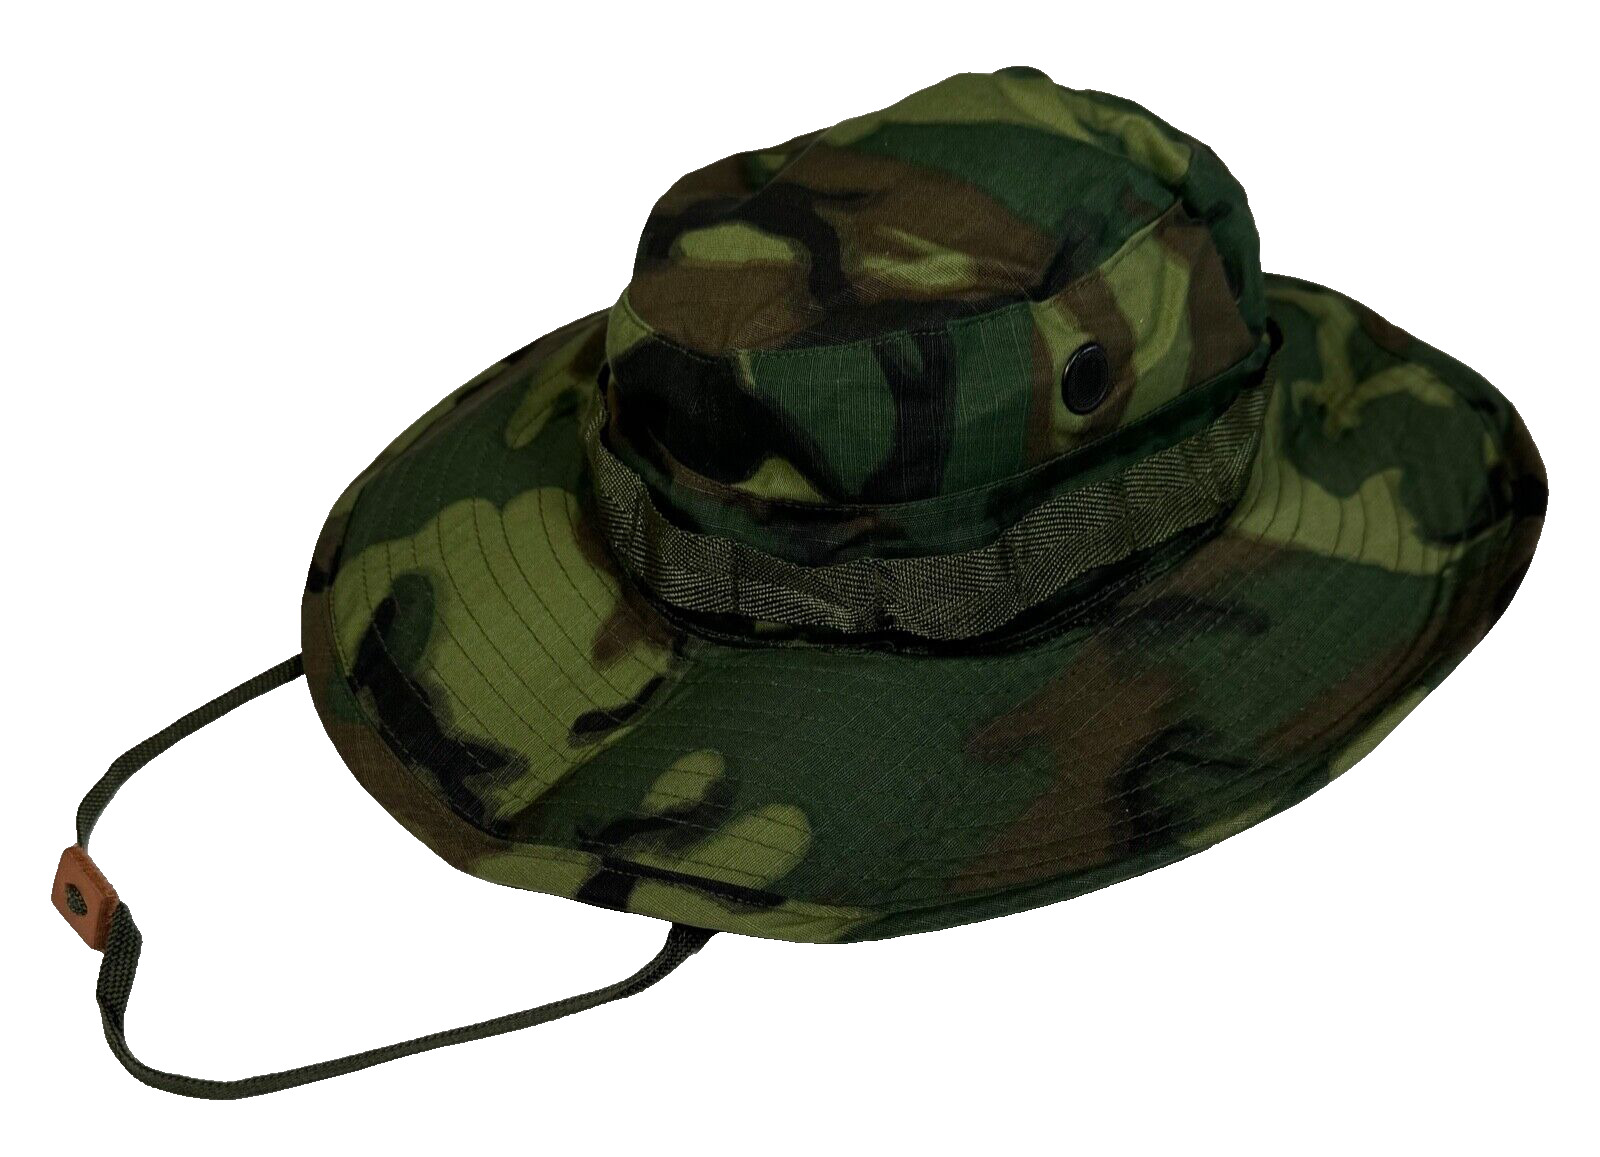 New Genuine US Military Vietnam ERDL Woodland Camo Boonie Hat Cover Size 6 5/8